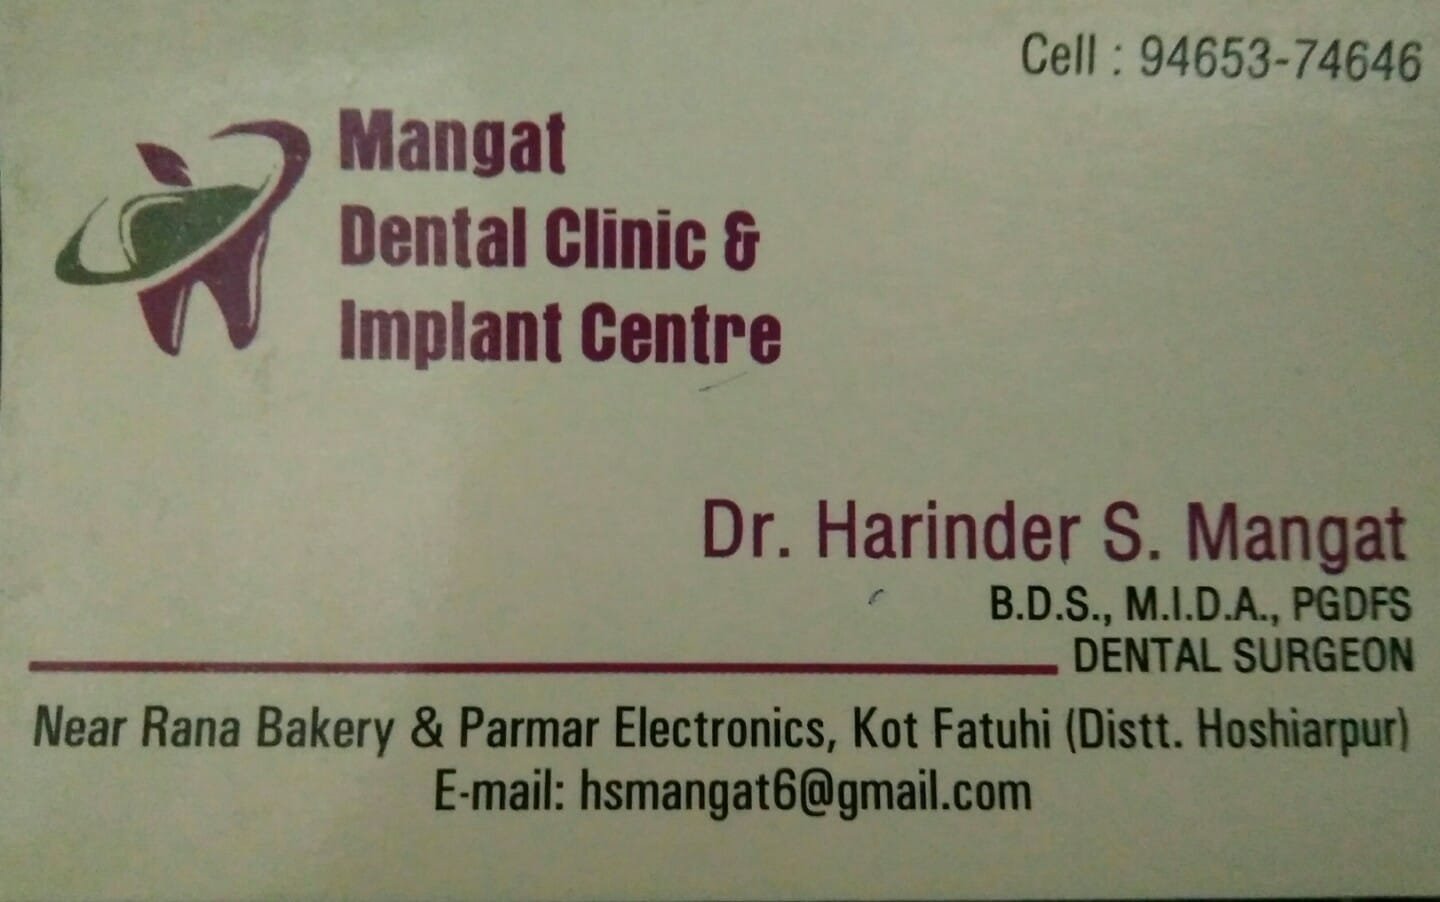 Mangat Dental Clinic Implant Centre